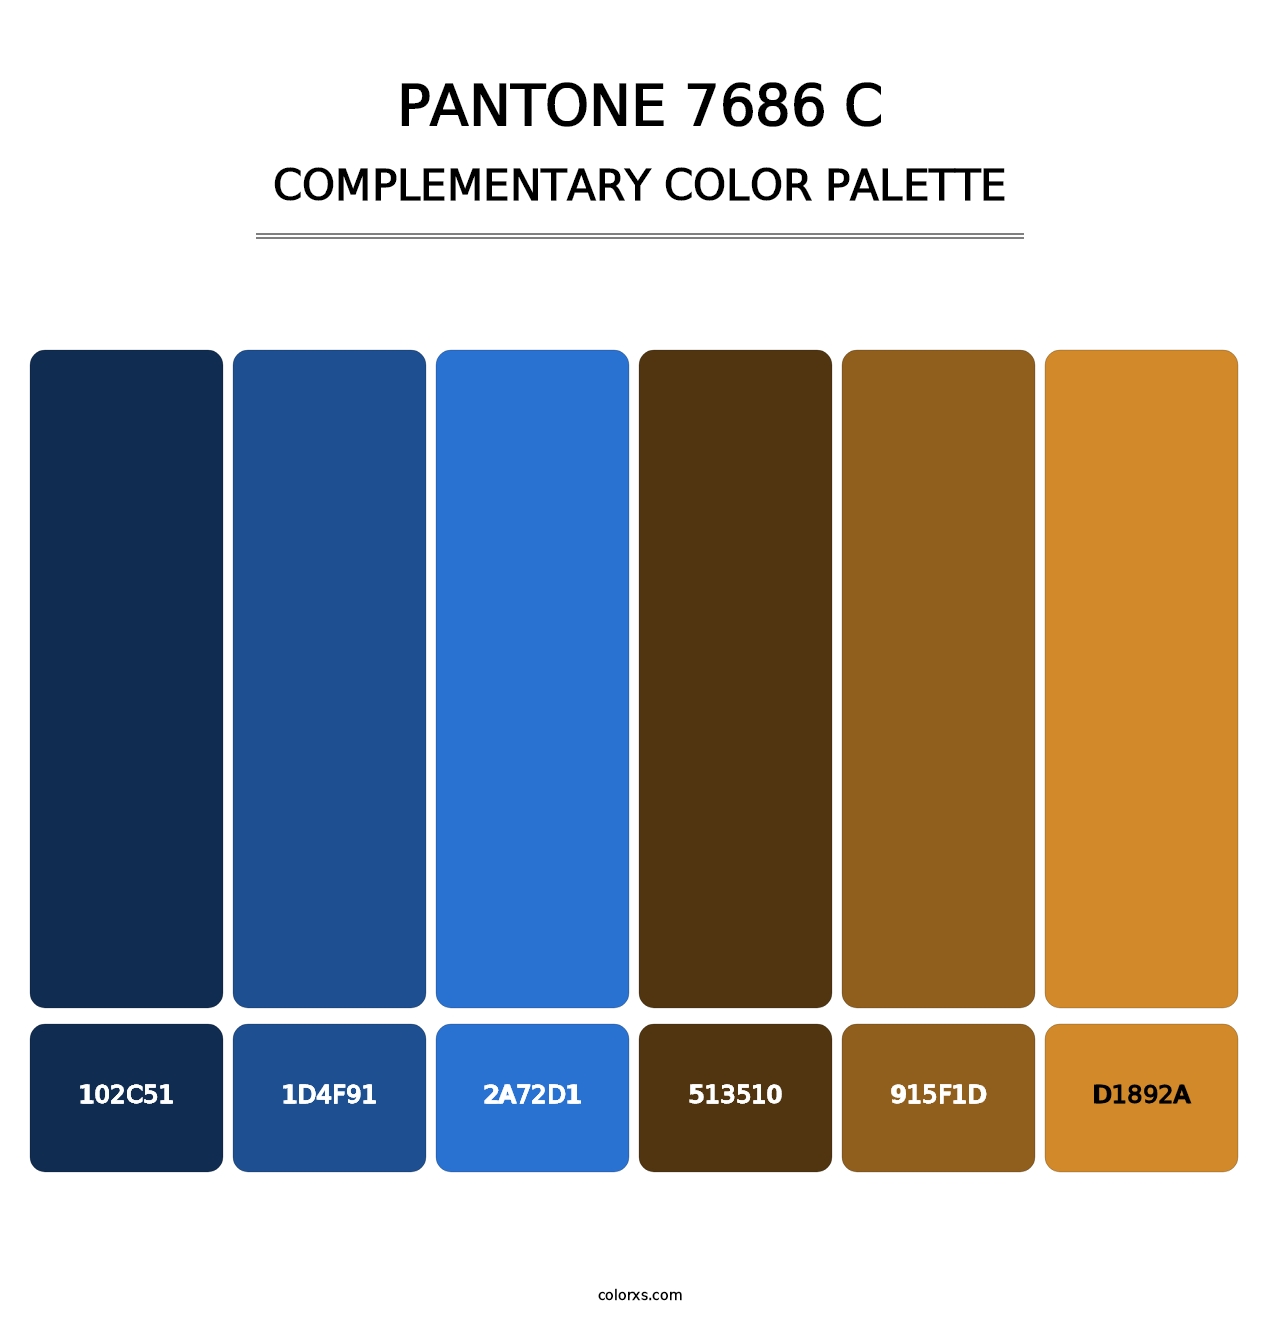 PANTONE 7686 C - Complementary Color Palette